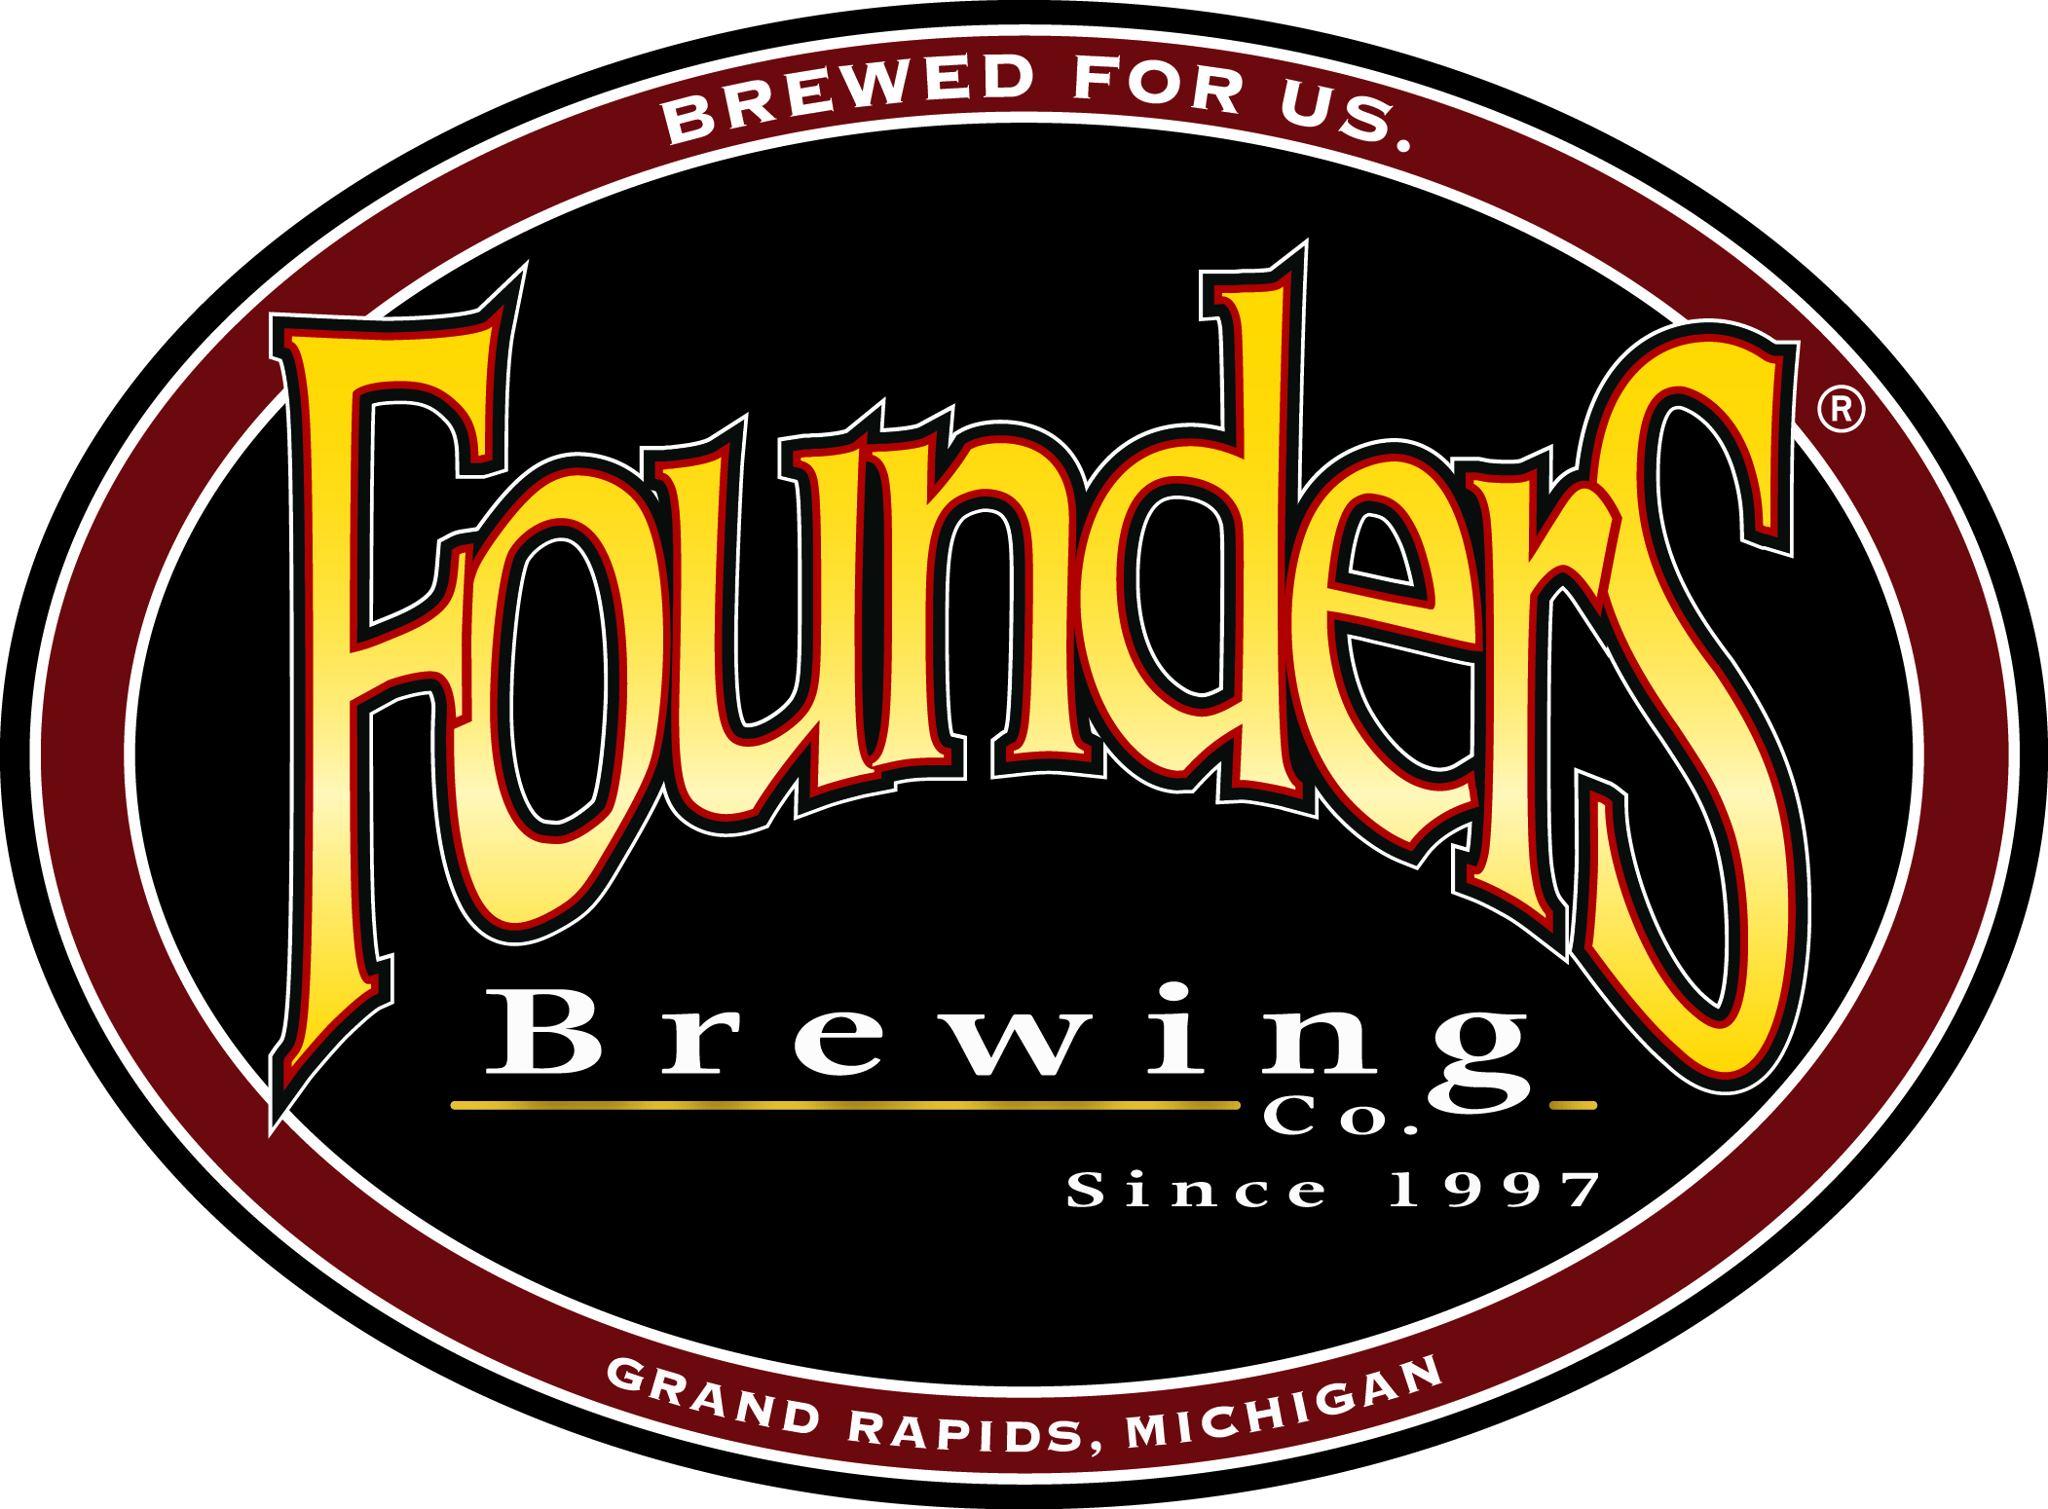 Founders Logo - founders logo Street Journal